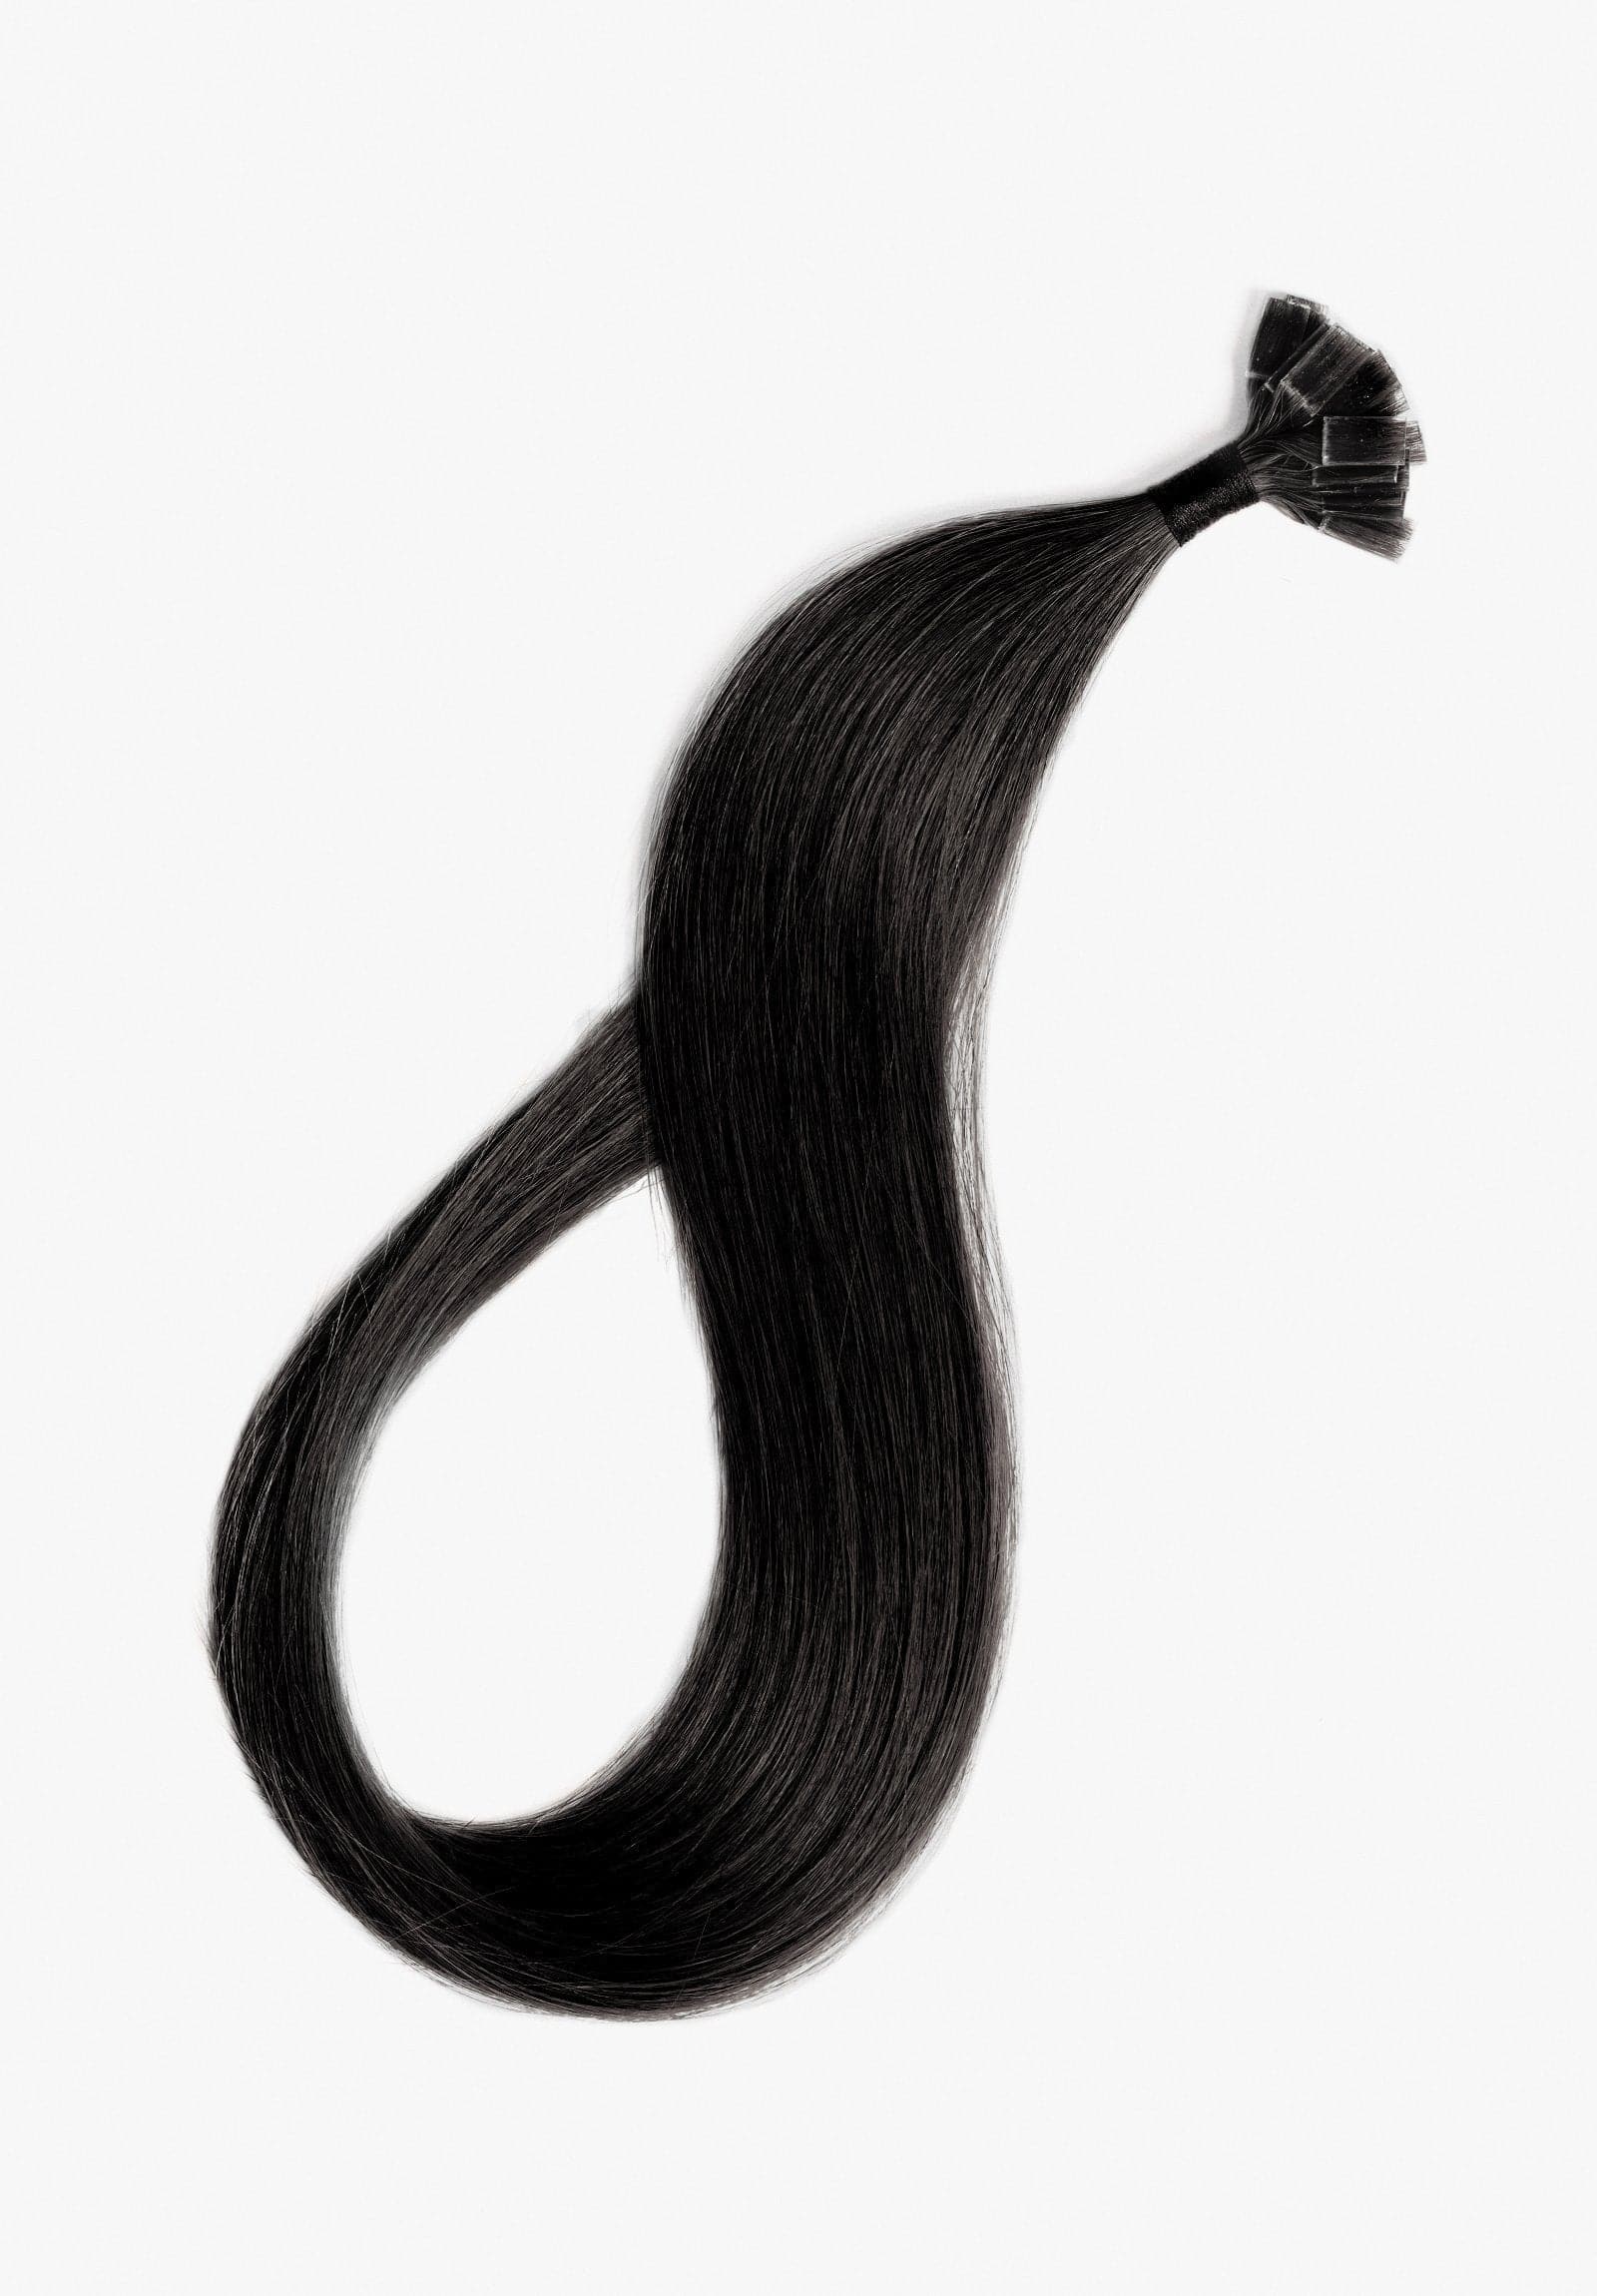 16" Kera-Link Straight #1 (Jet Black) - Donna Bella Hair